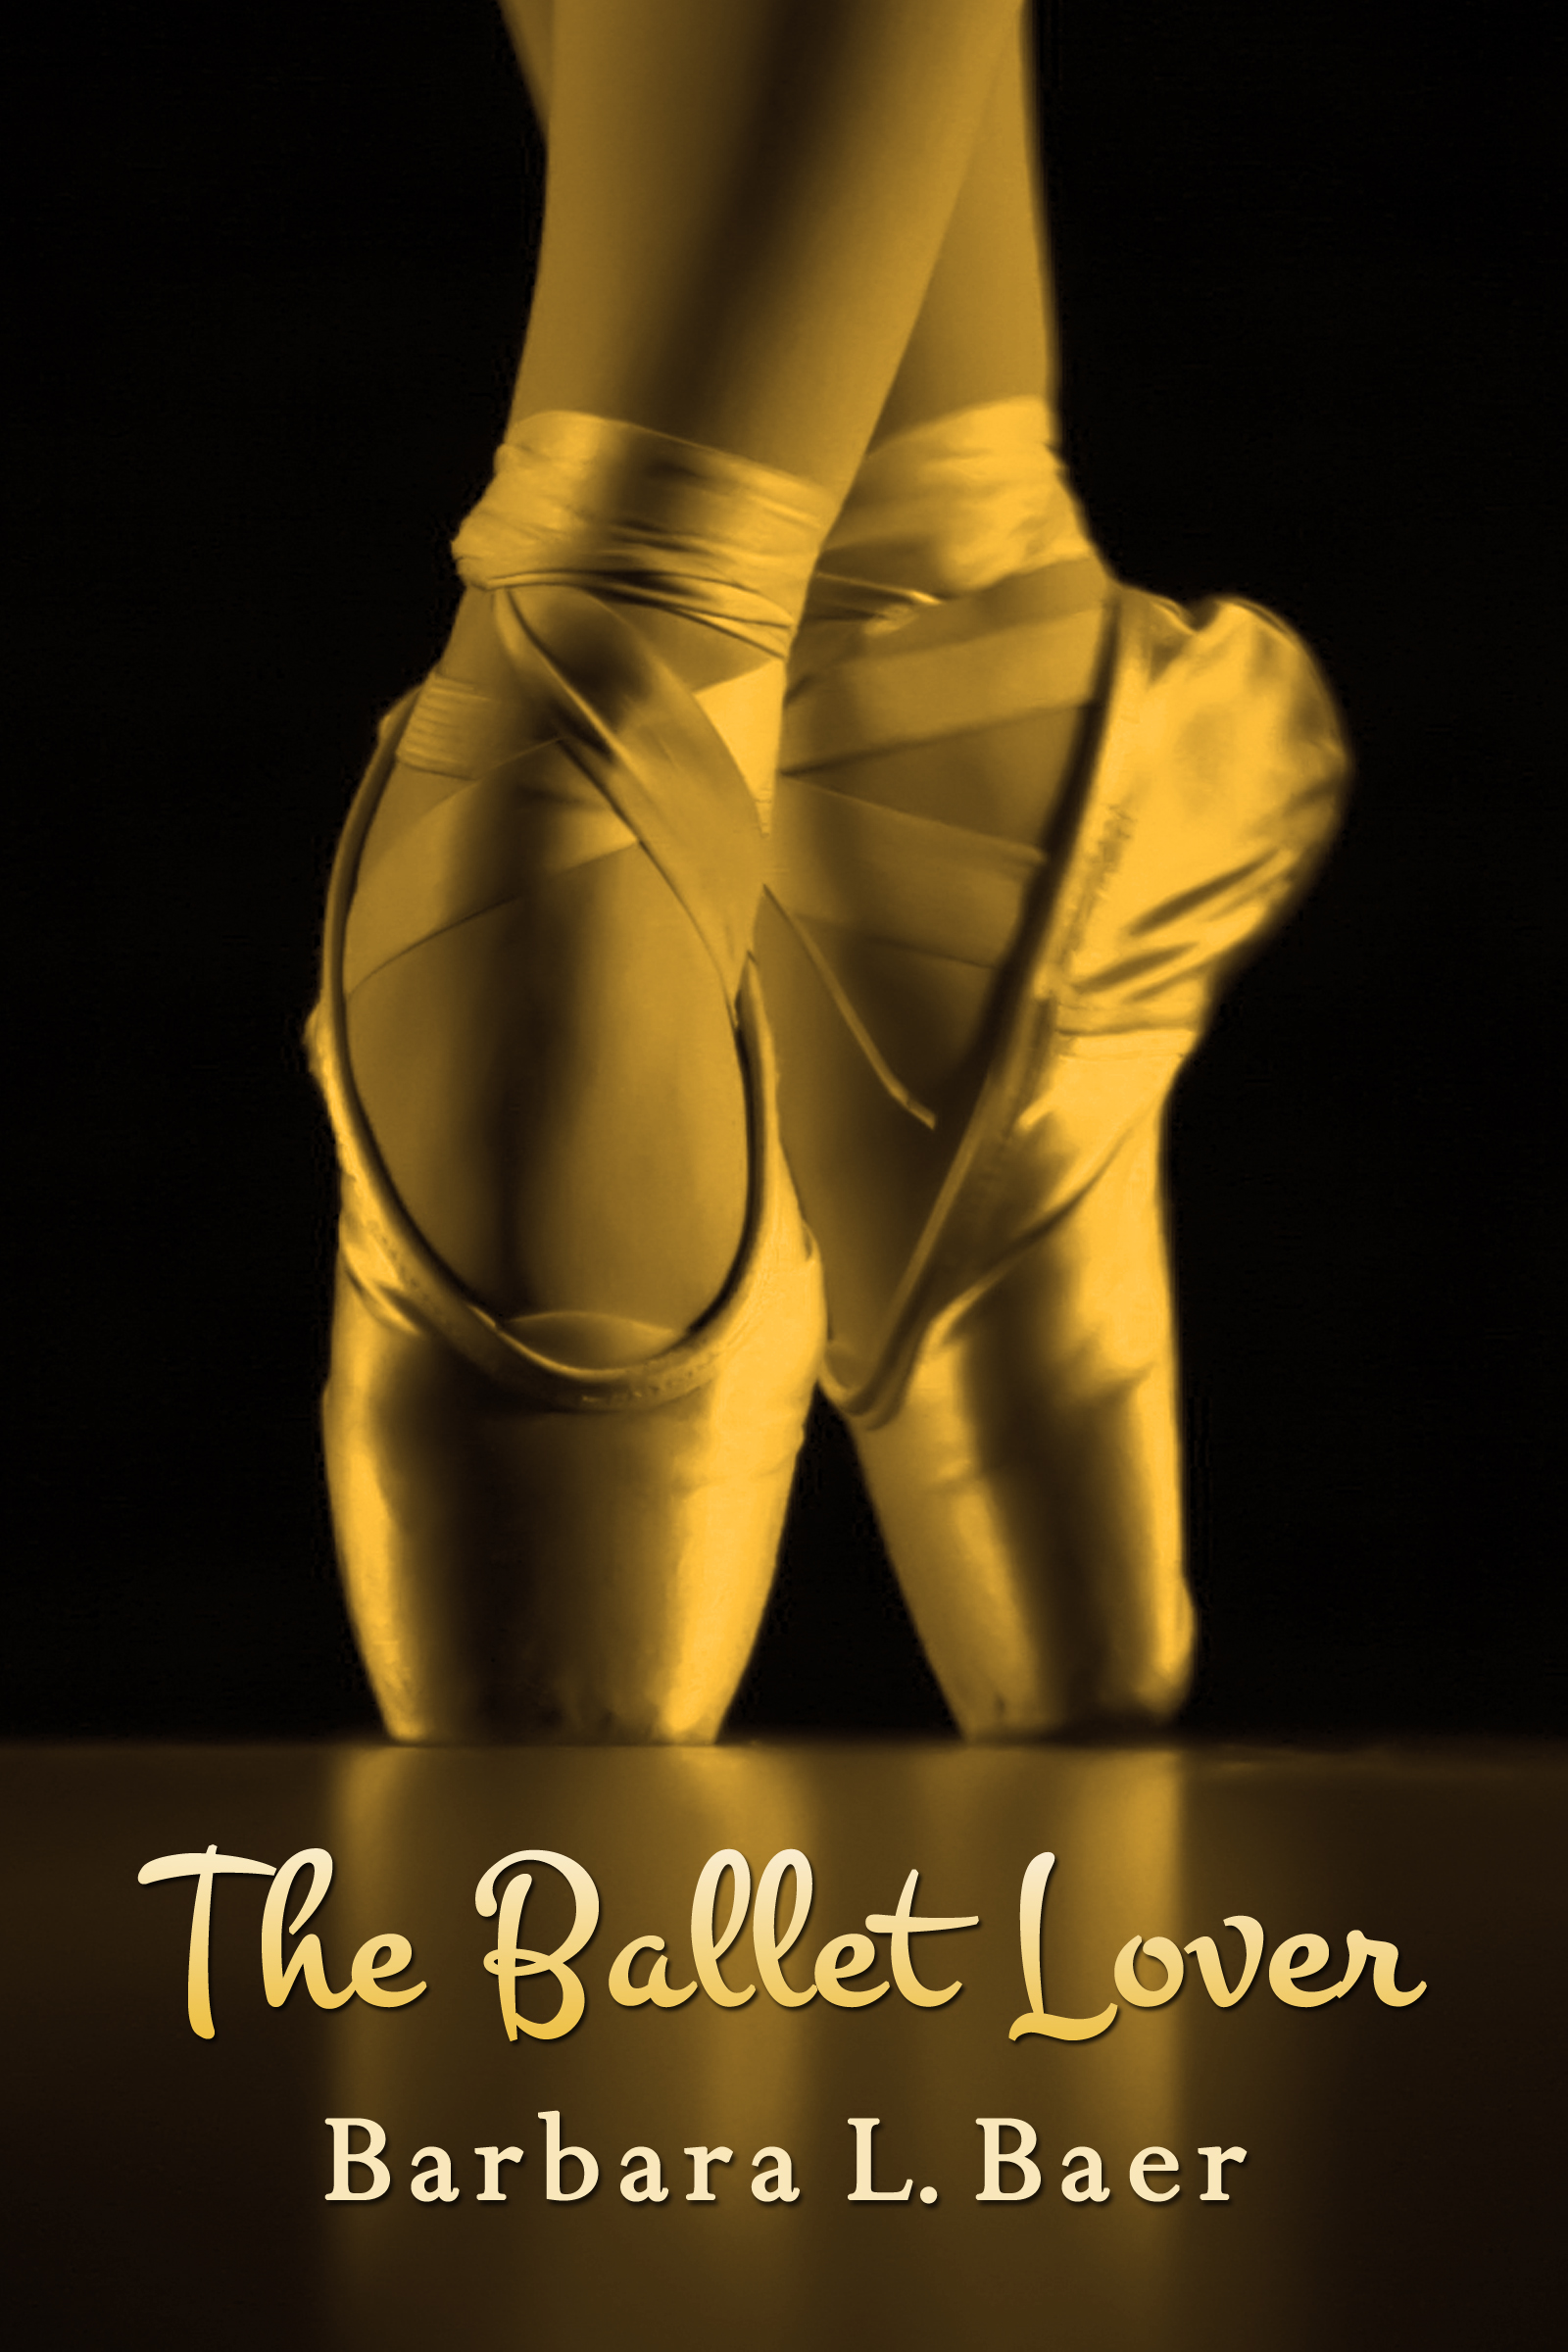 The Ballet Lover by Barbara L. Baer